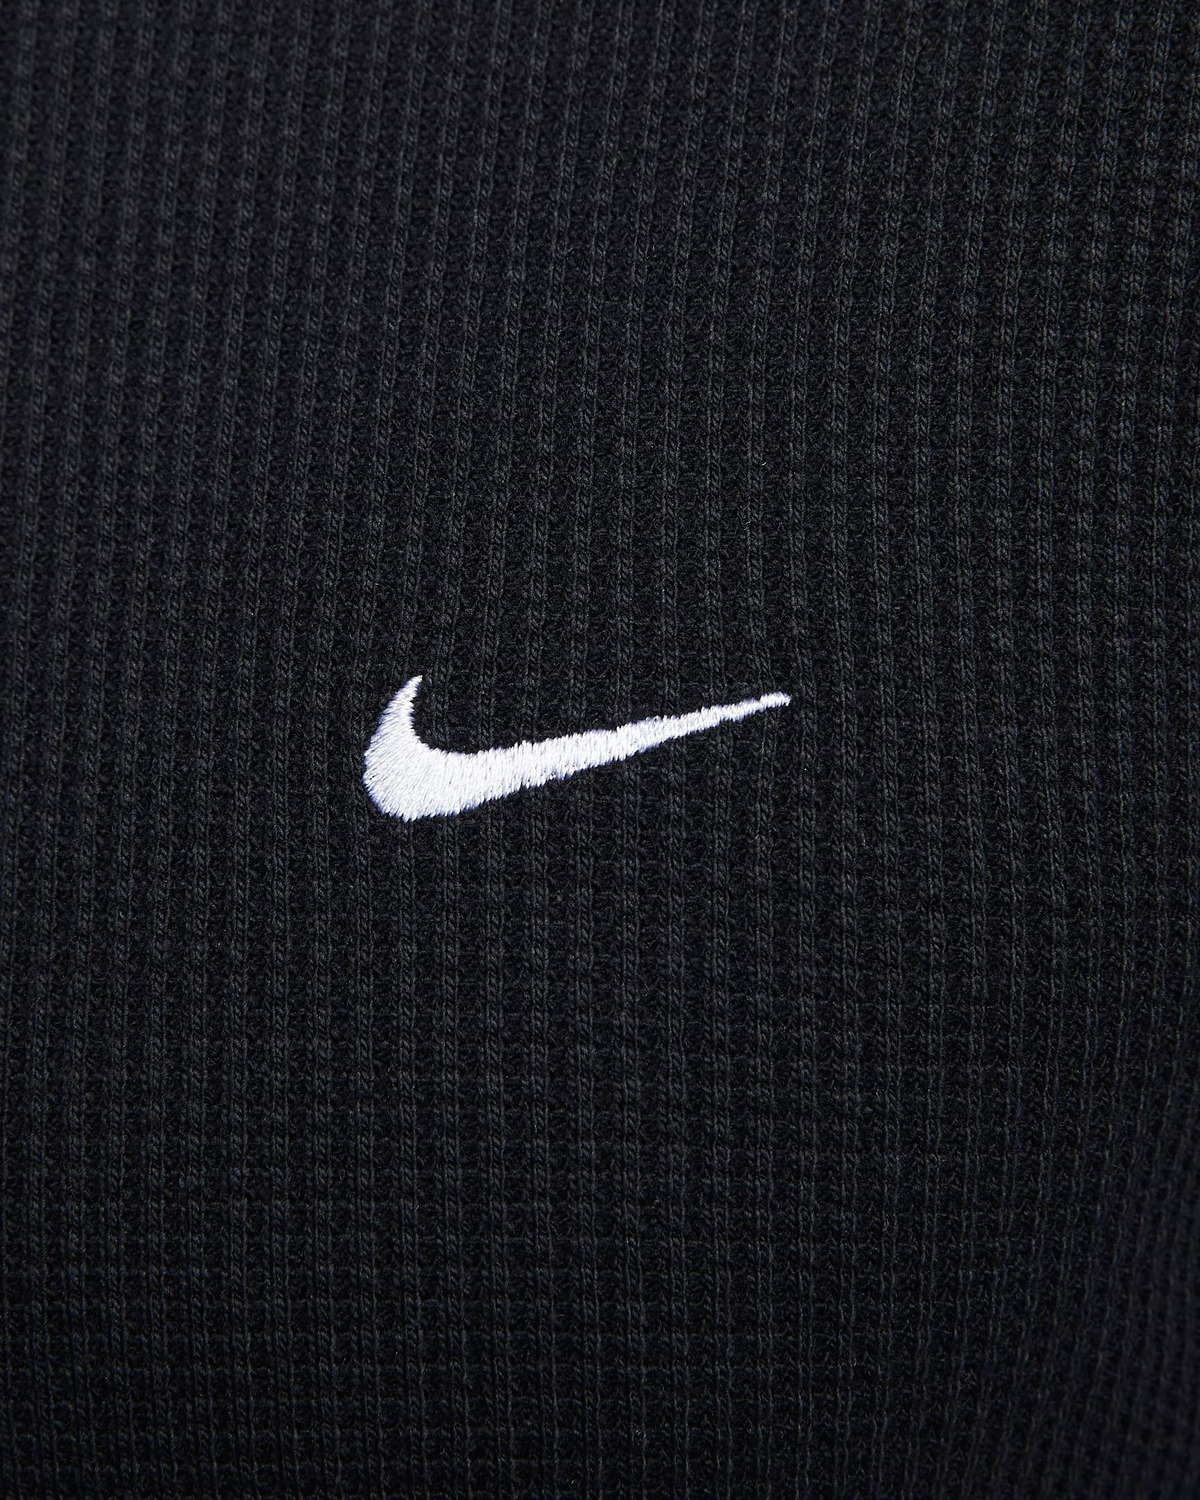 Nike-Life-Long-Sleeve-Waffle-Top-Black-White-2